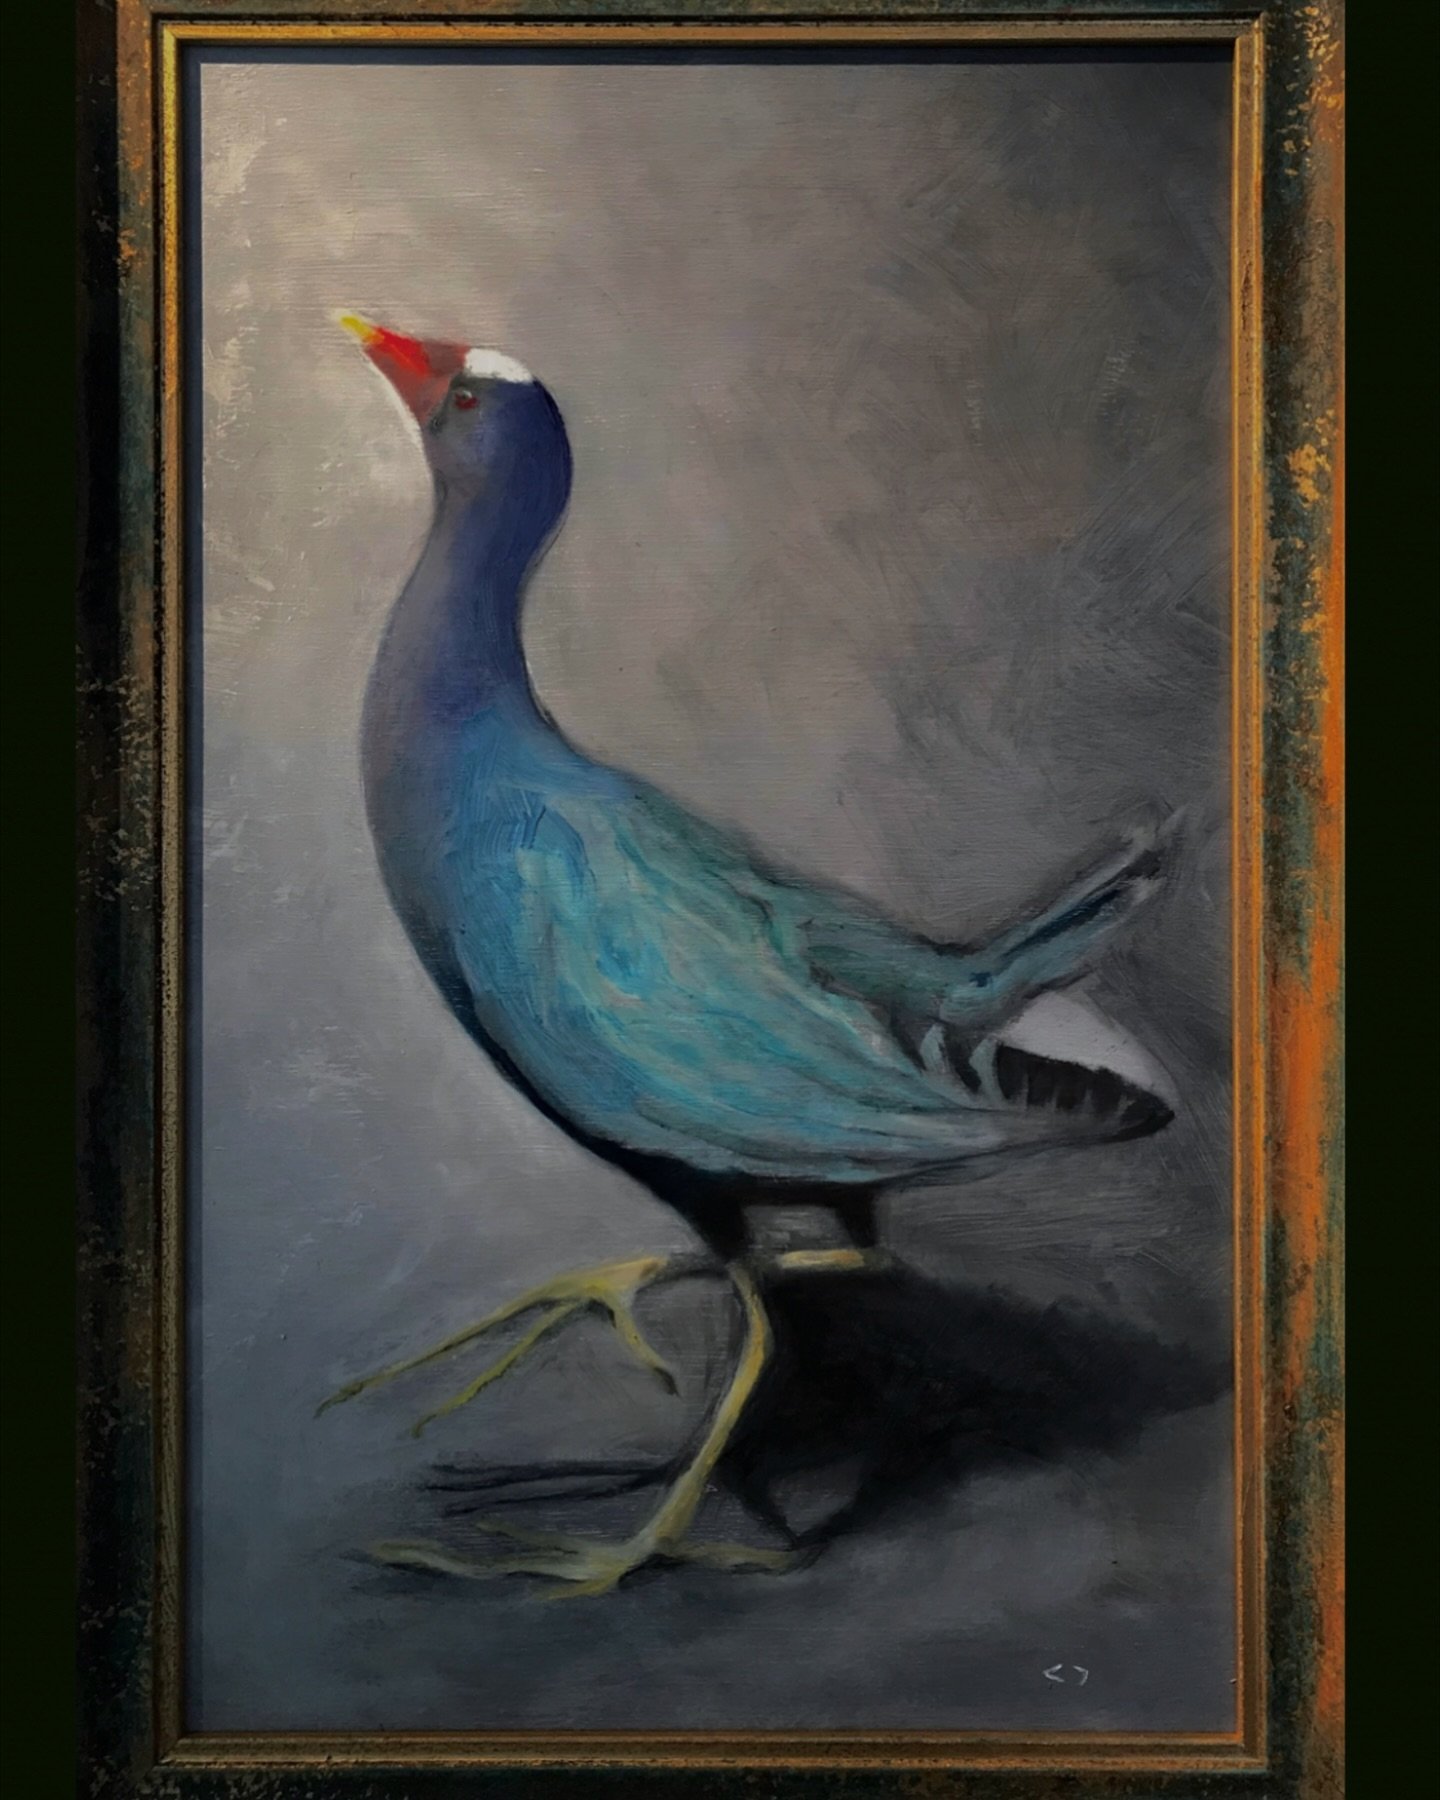 Purple Gallinule (framed).
Oil on panel.
18x24 inches.

#oilpainting #purplegallinule #commissioned #framed #niebergart